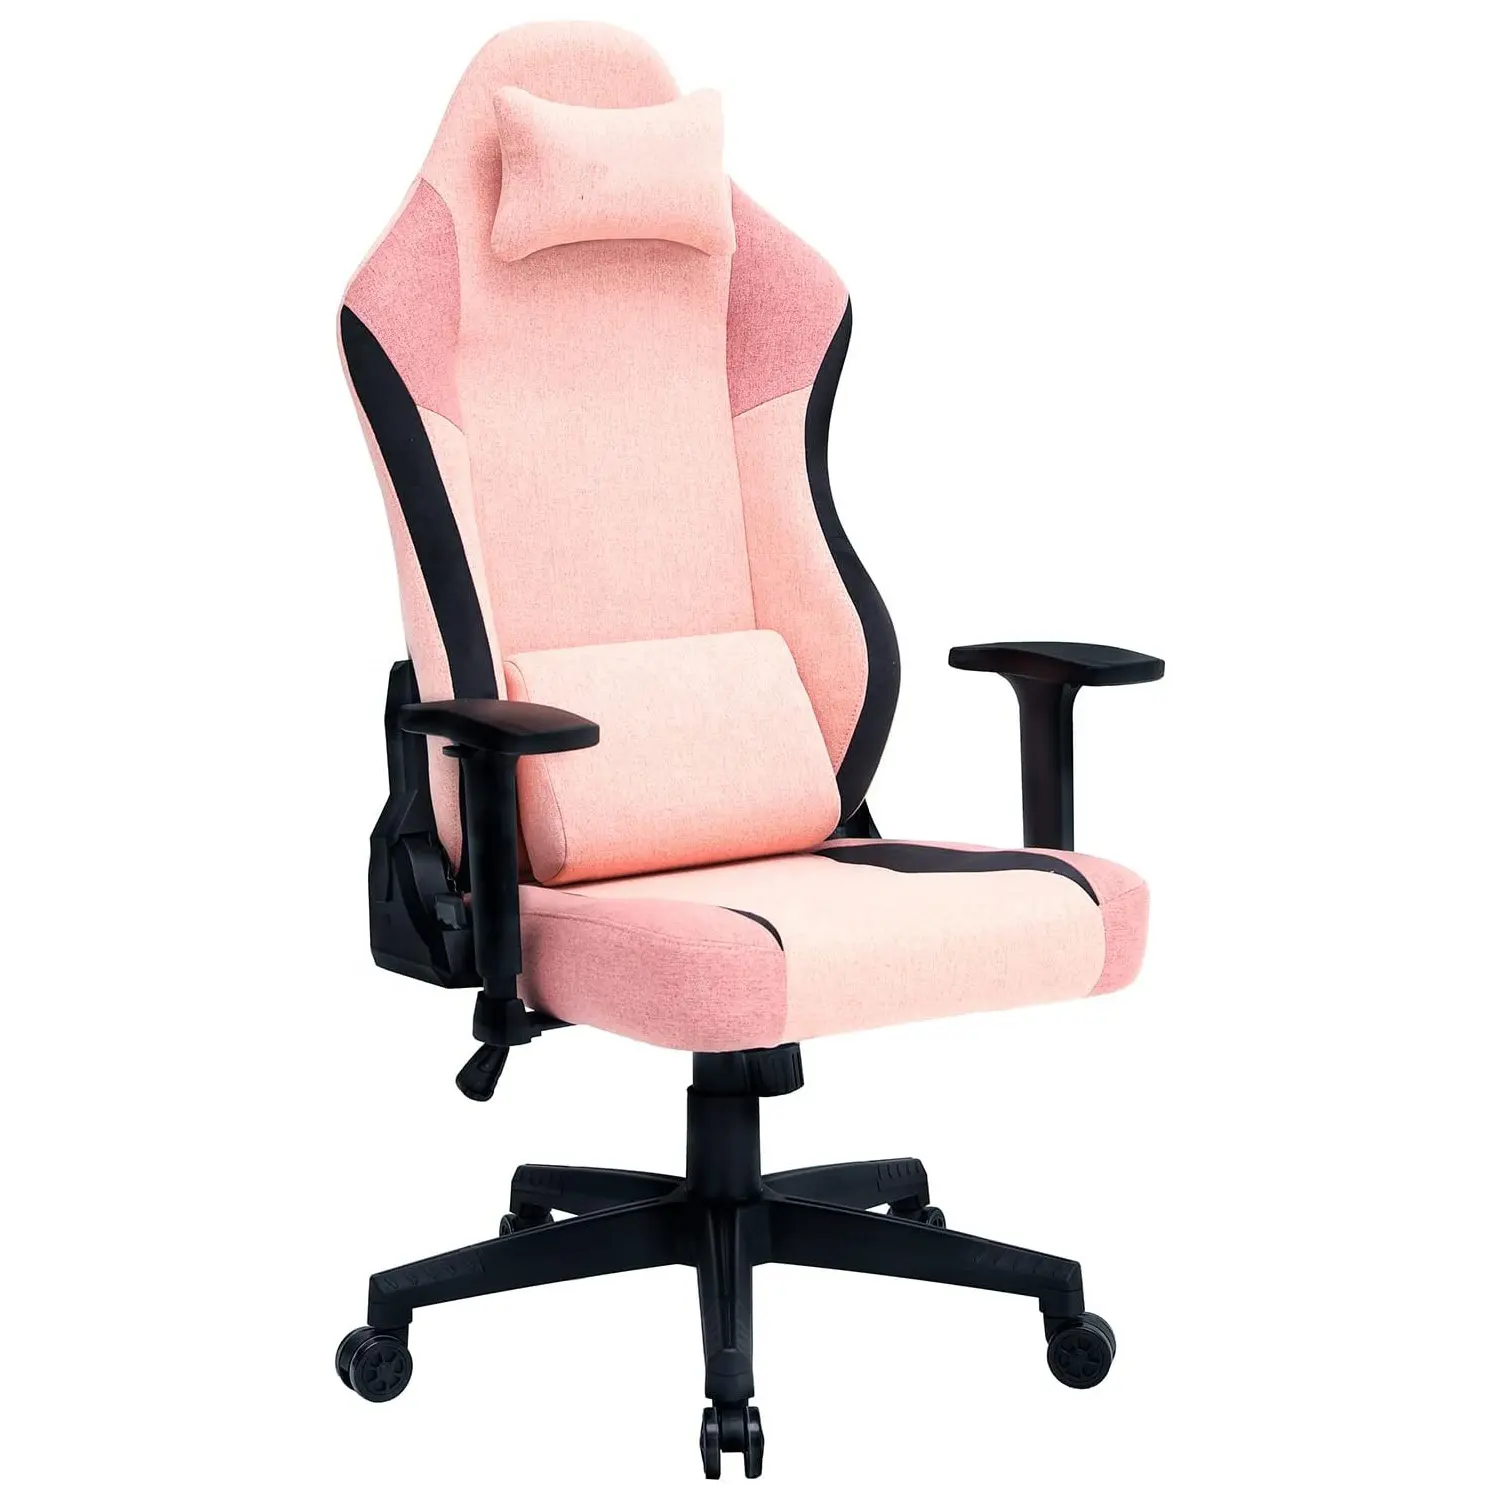 Grosir kursi komputer Gamer Cadeira, kursi kantor, Logo kustom, kursi komputer Gaming, kursi ergonomis rumah